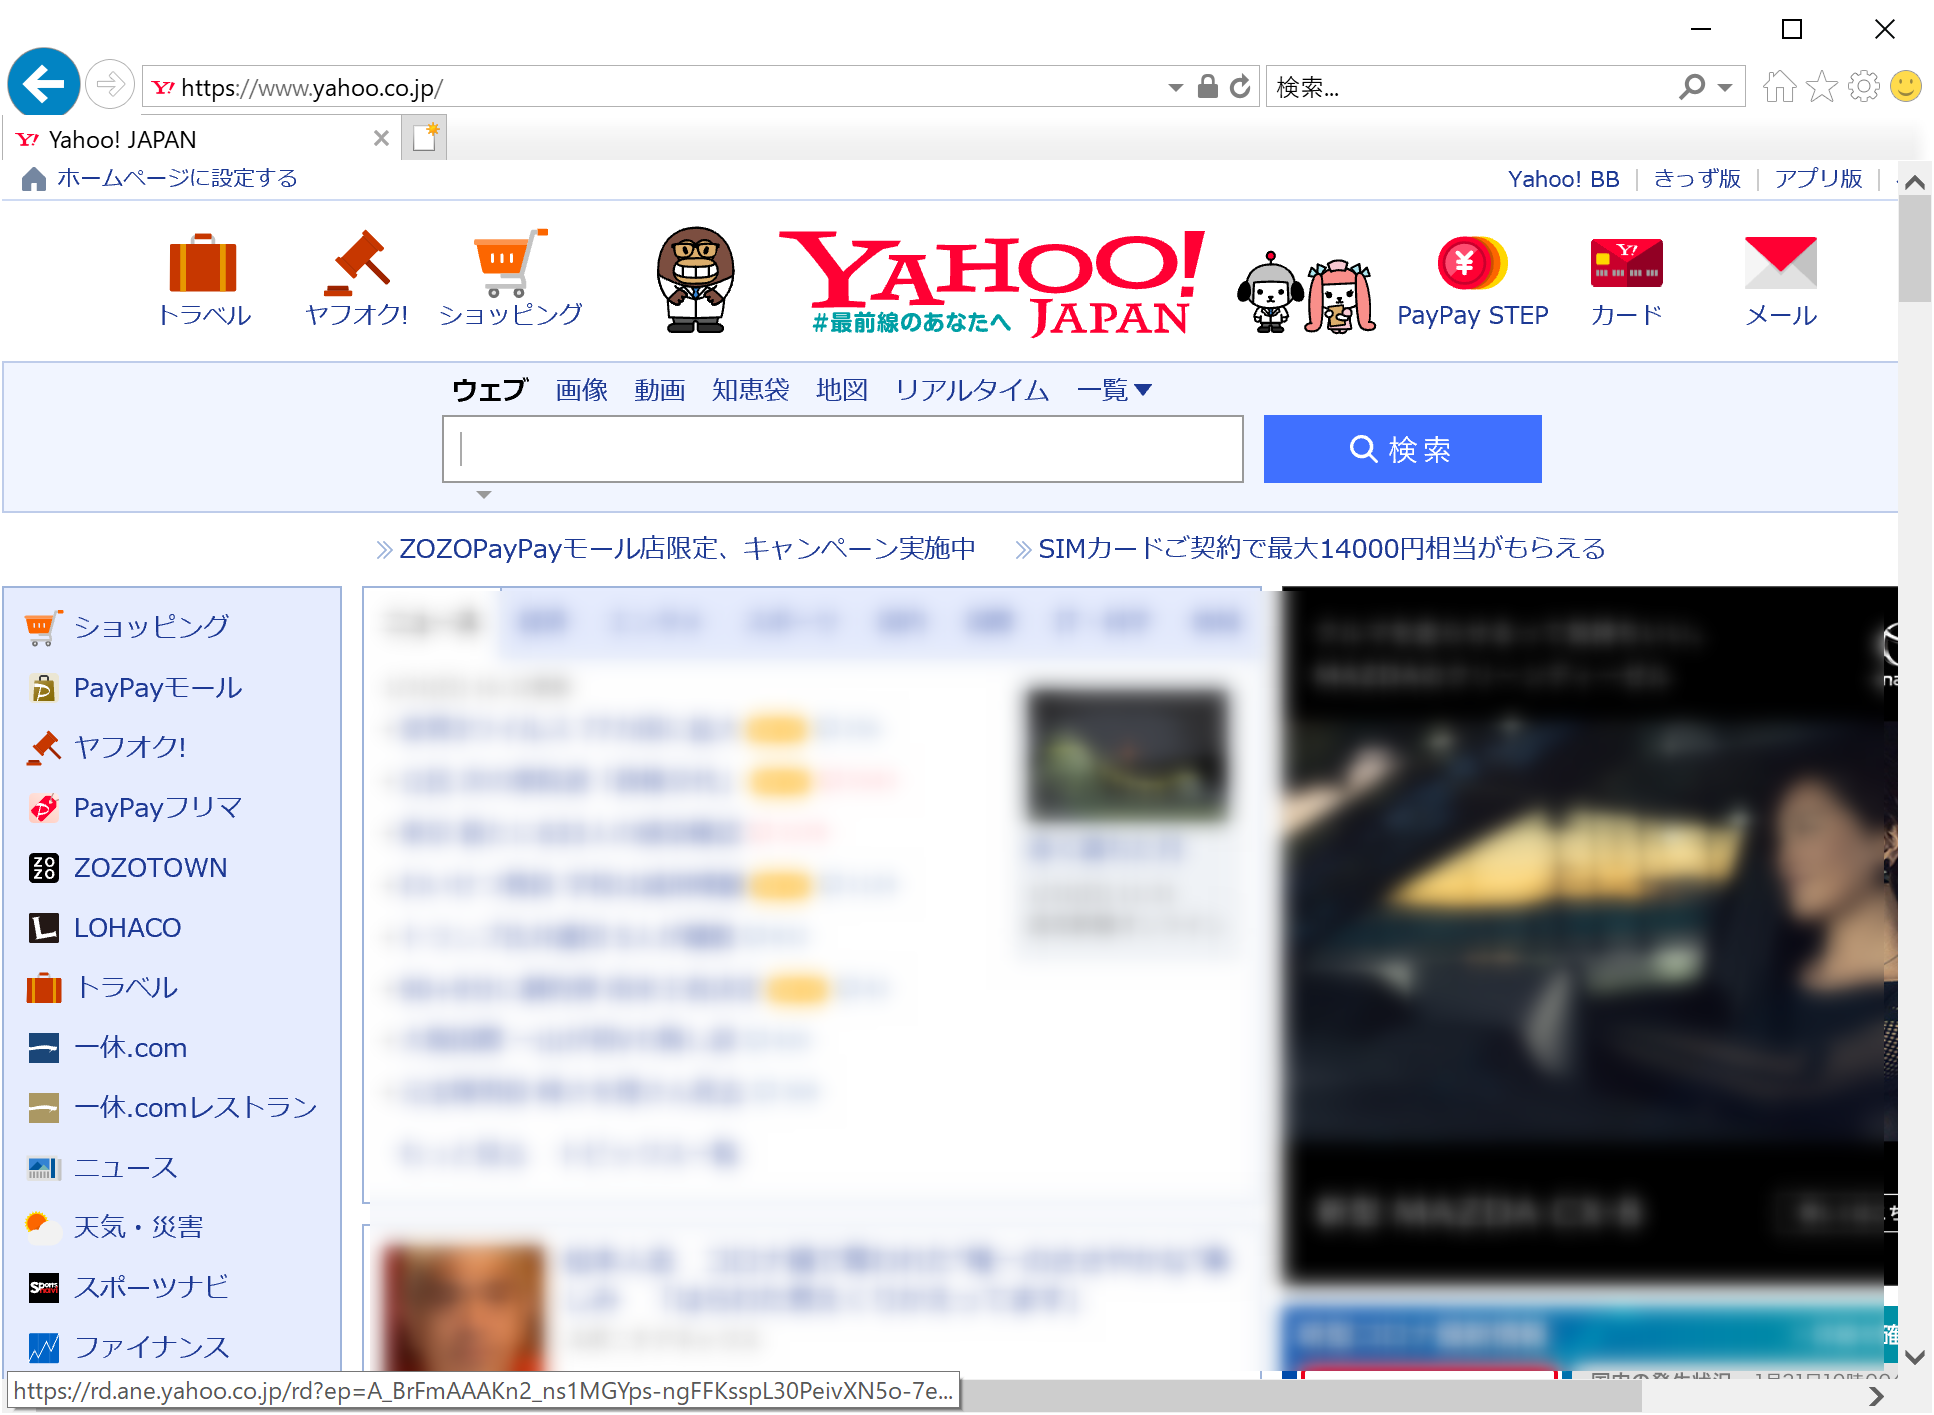 Yahoo.co.jp language settings